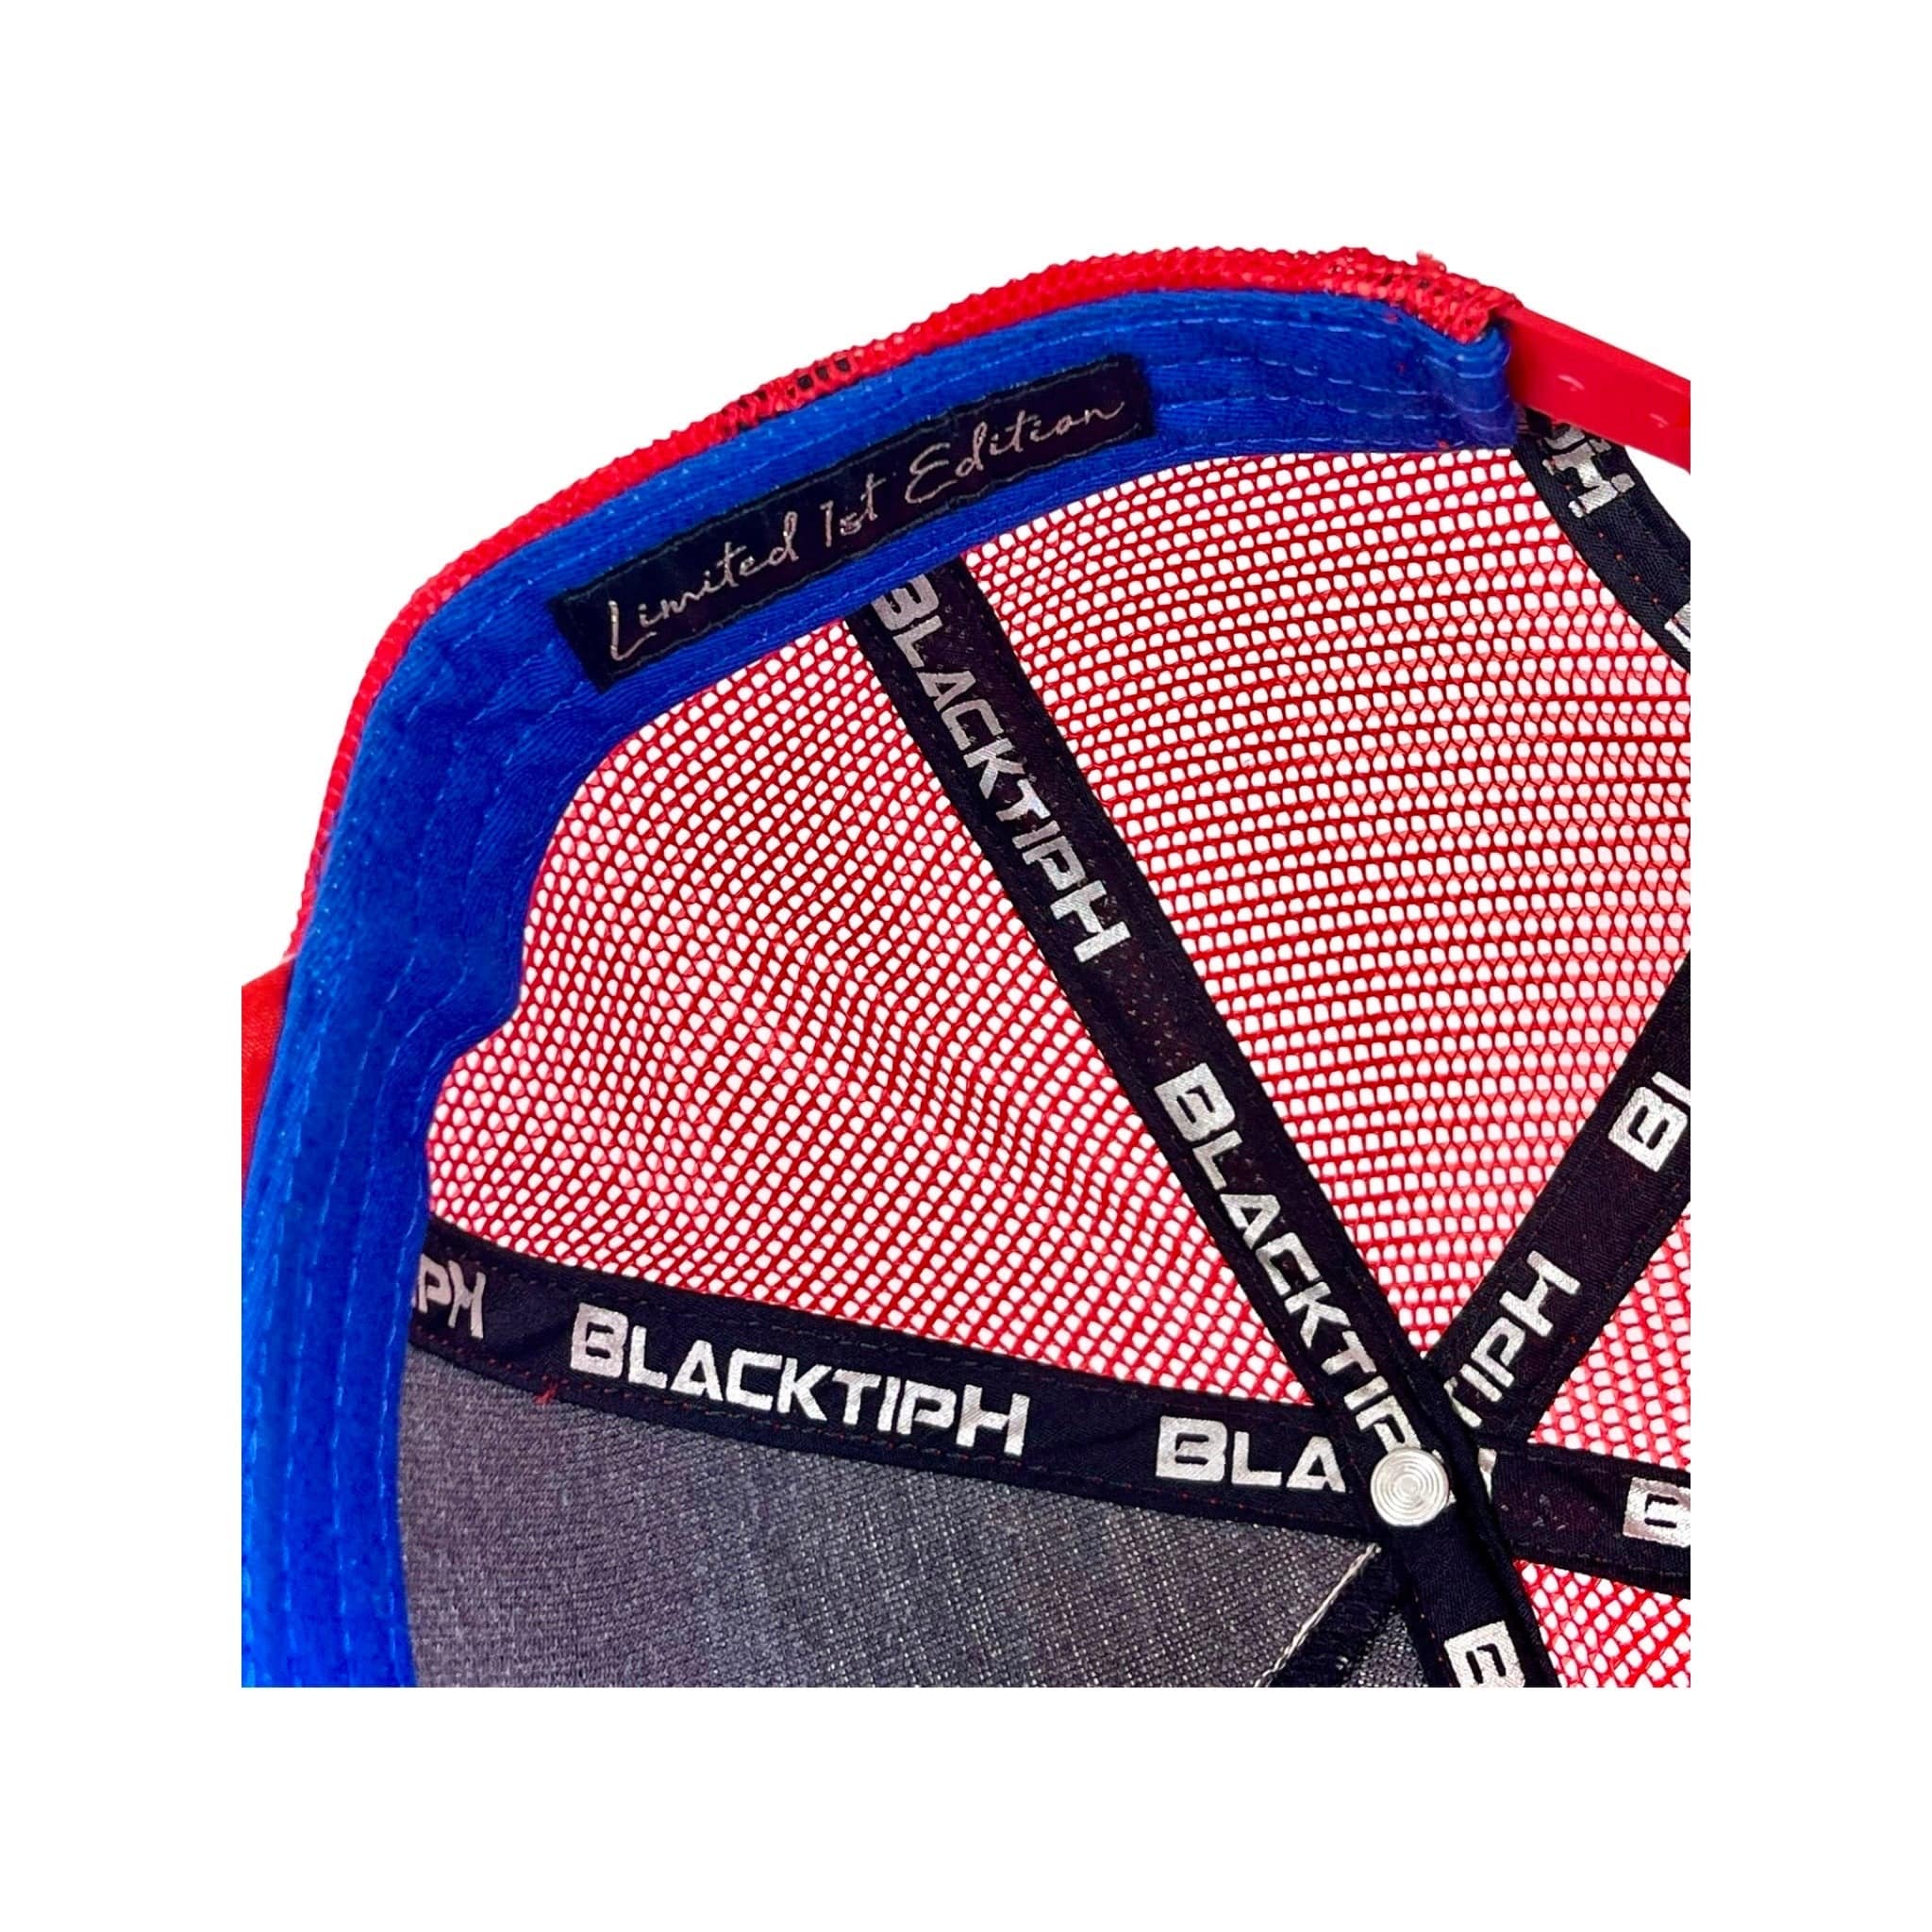 BlacktipH Penn Retro Limited Edition Snapback 3.0 Cap